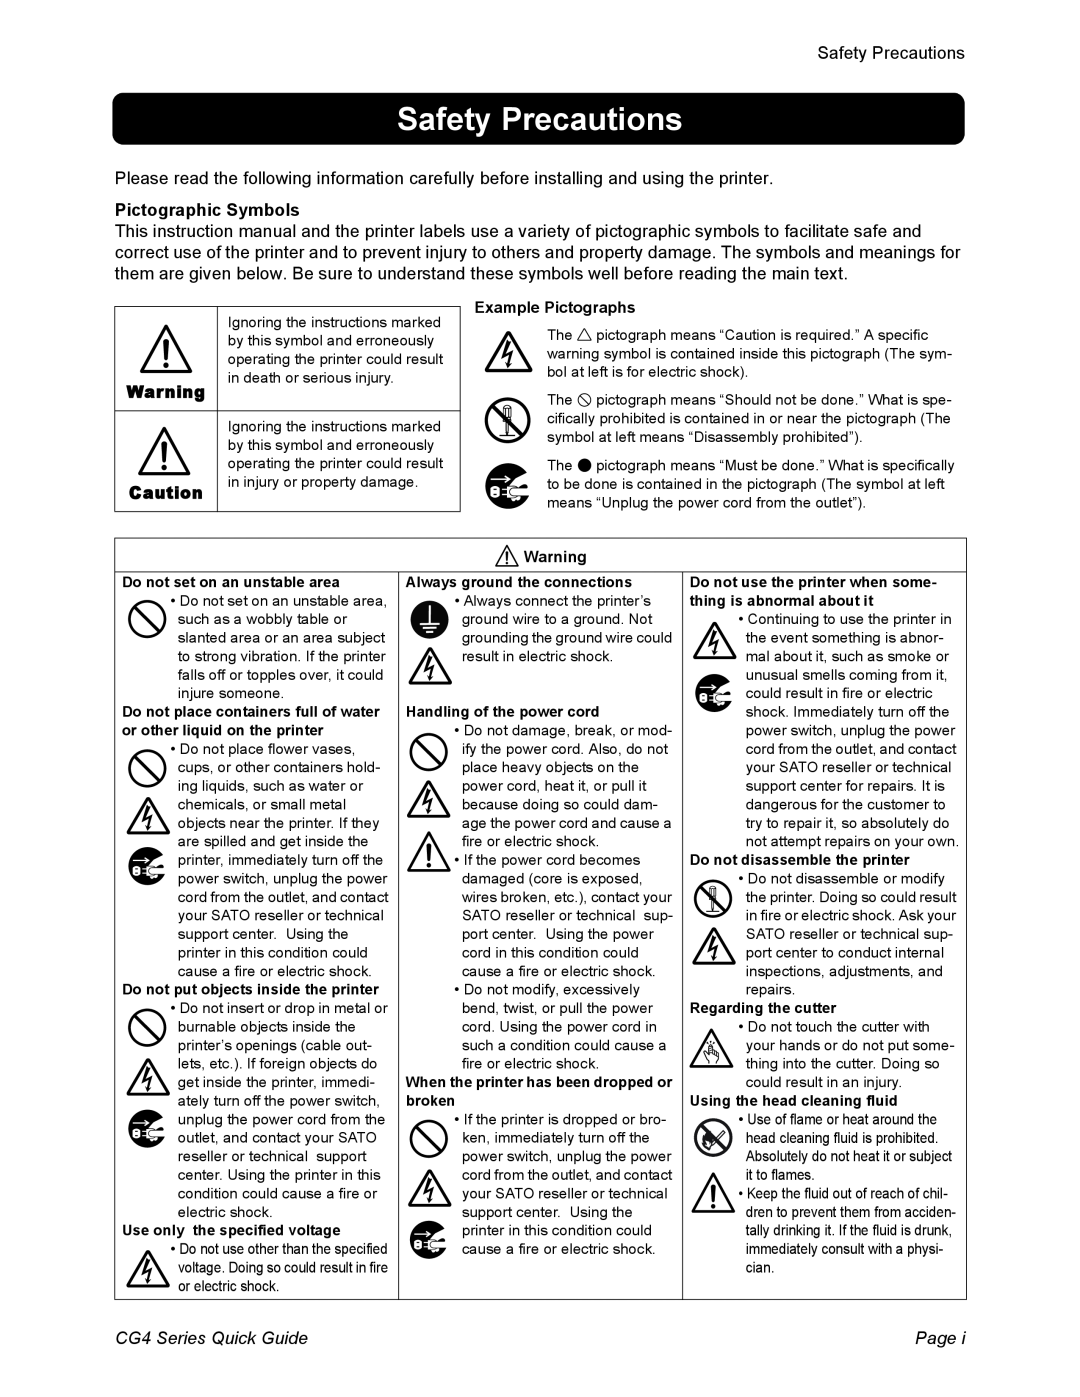 SATO CG408TT, CG412DT, CG408DT, CG412TT manual Safety Precautions, Pictographic Symbols, CG4 Series Quick Guide, Page 